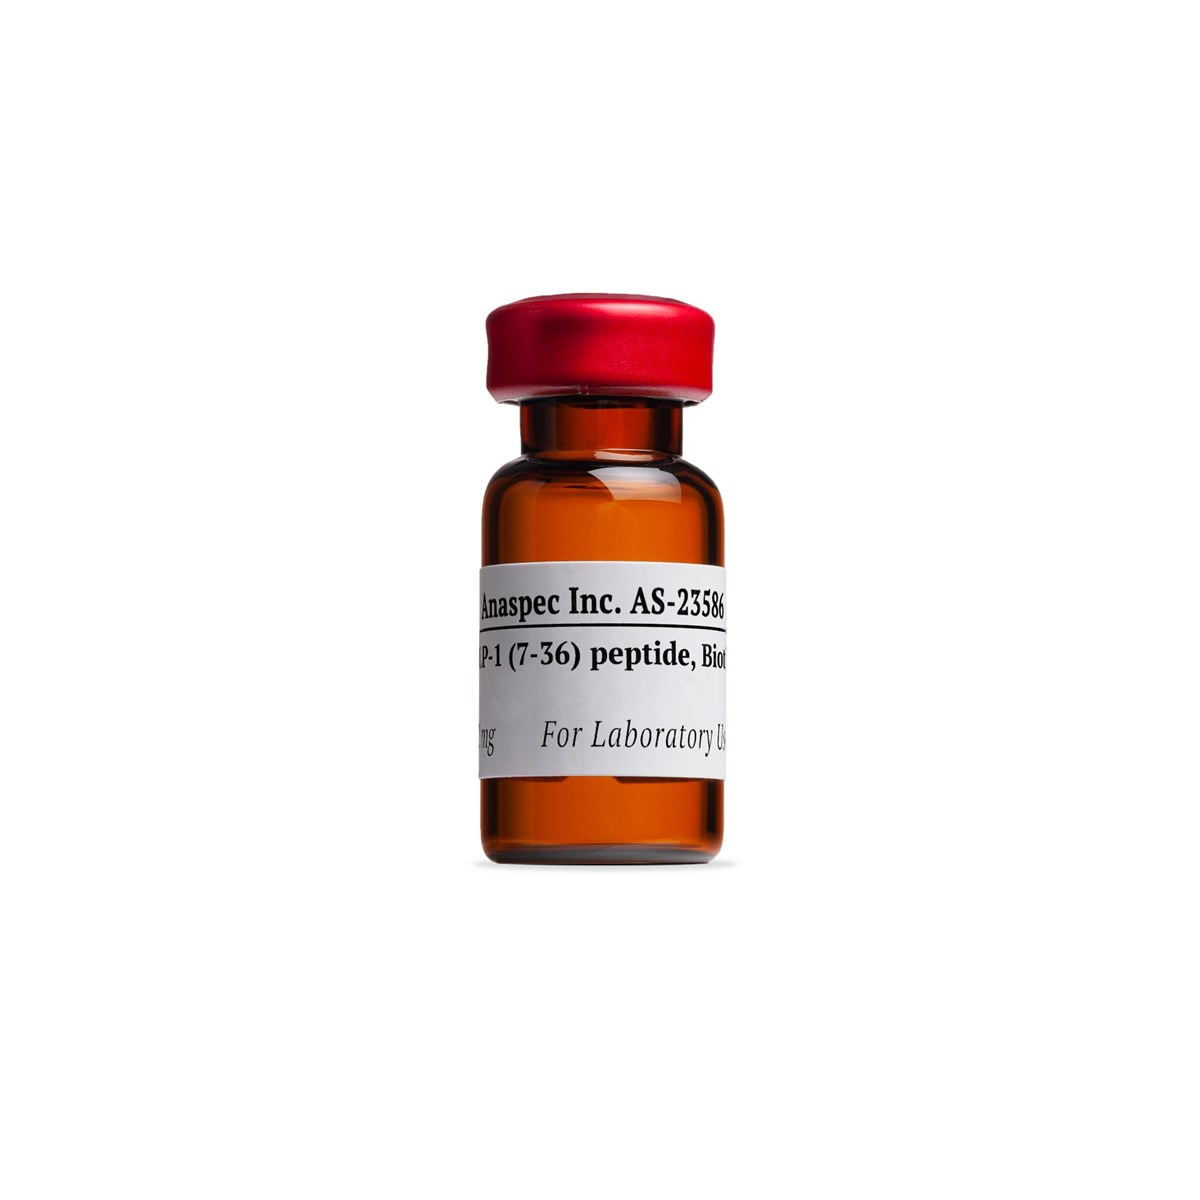 Glucagon-Like Peptide 1 GLP-1 (7-36) amide human mouse rat bovine